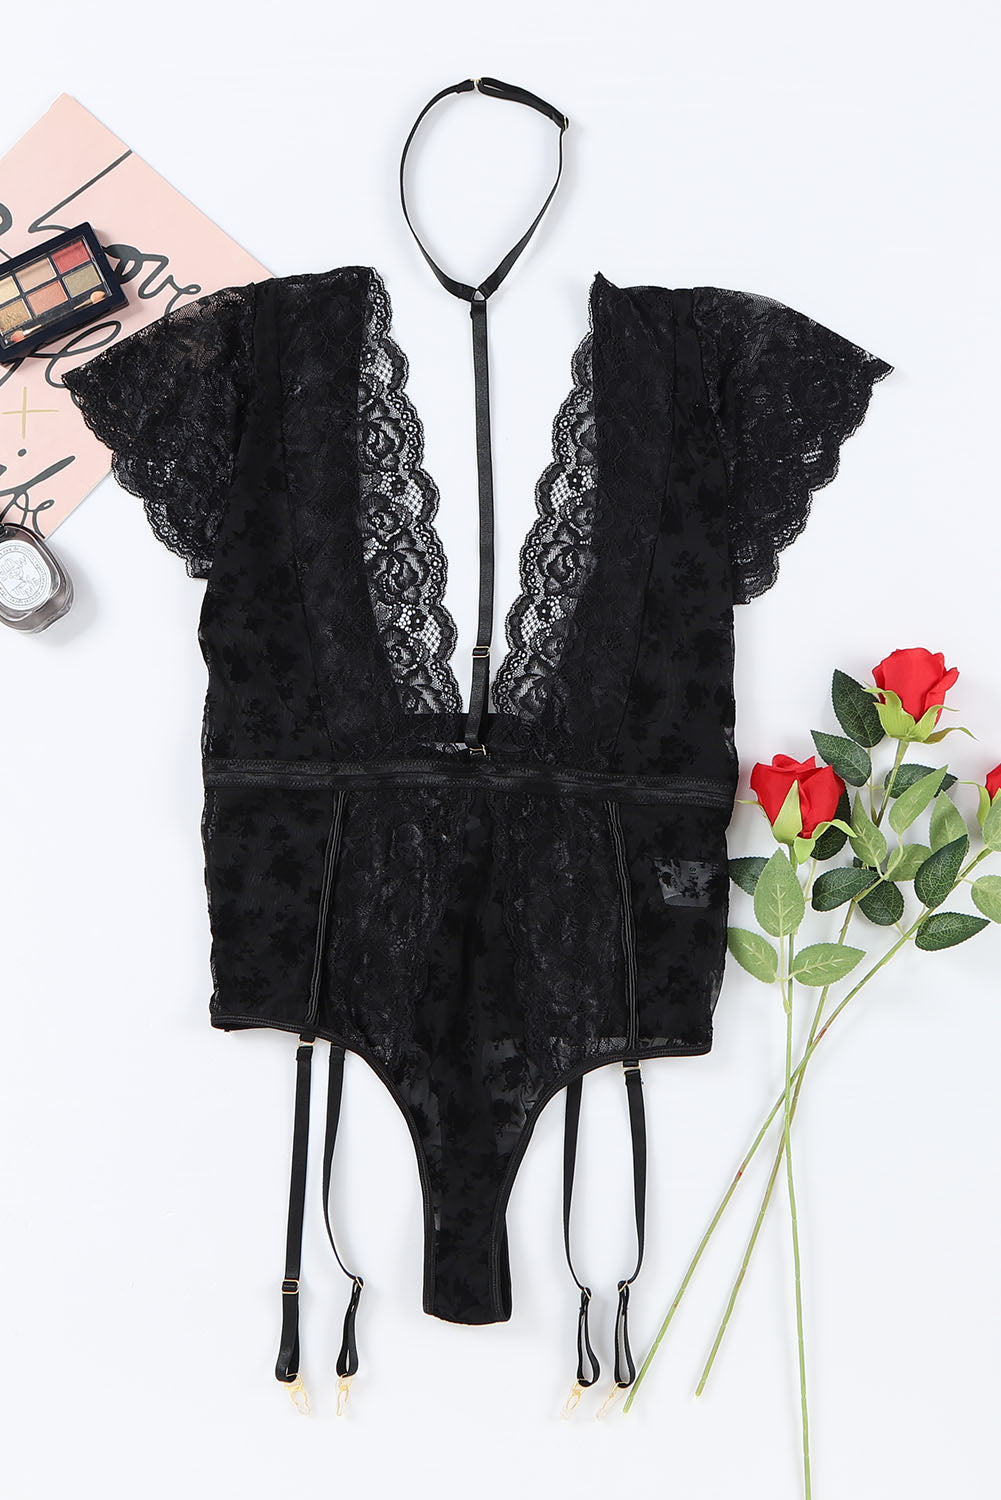 Black Plus Size Strappy Floral Lace Mesh Teddy Lingerie